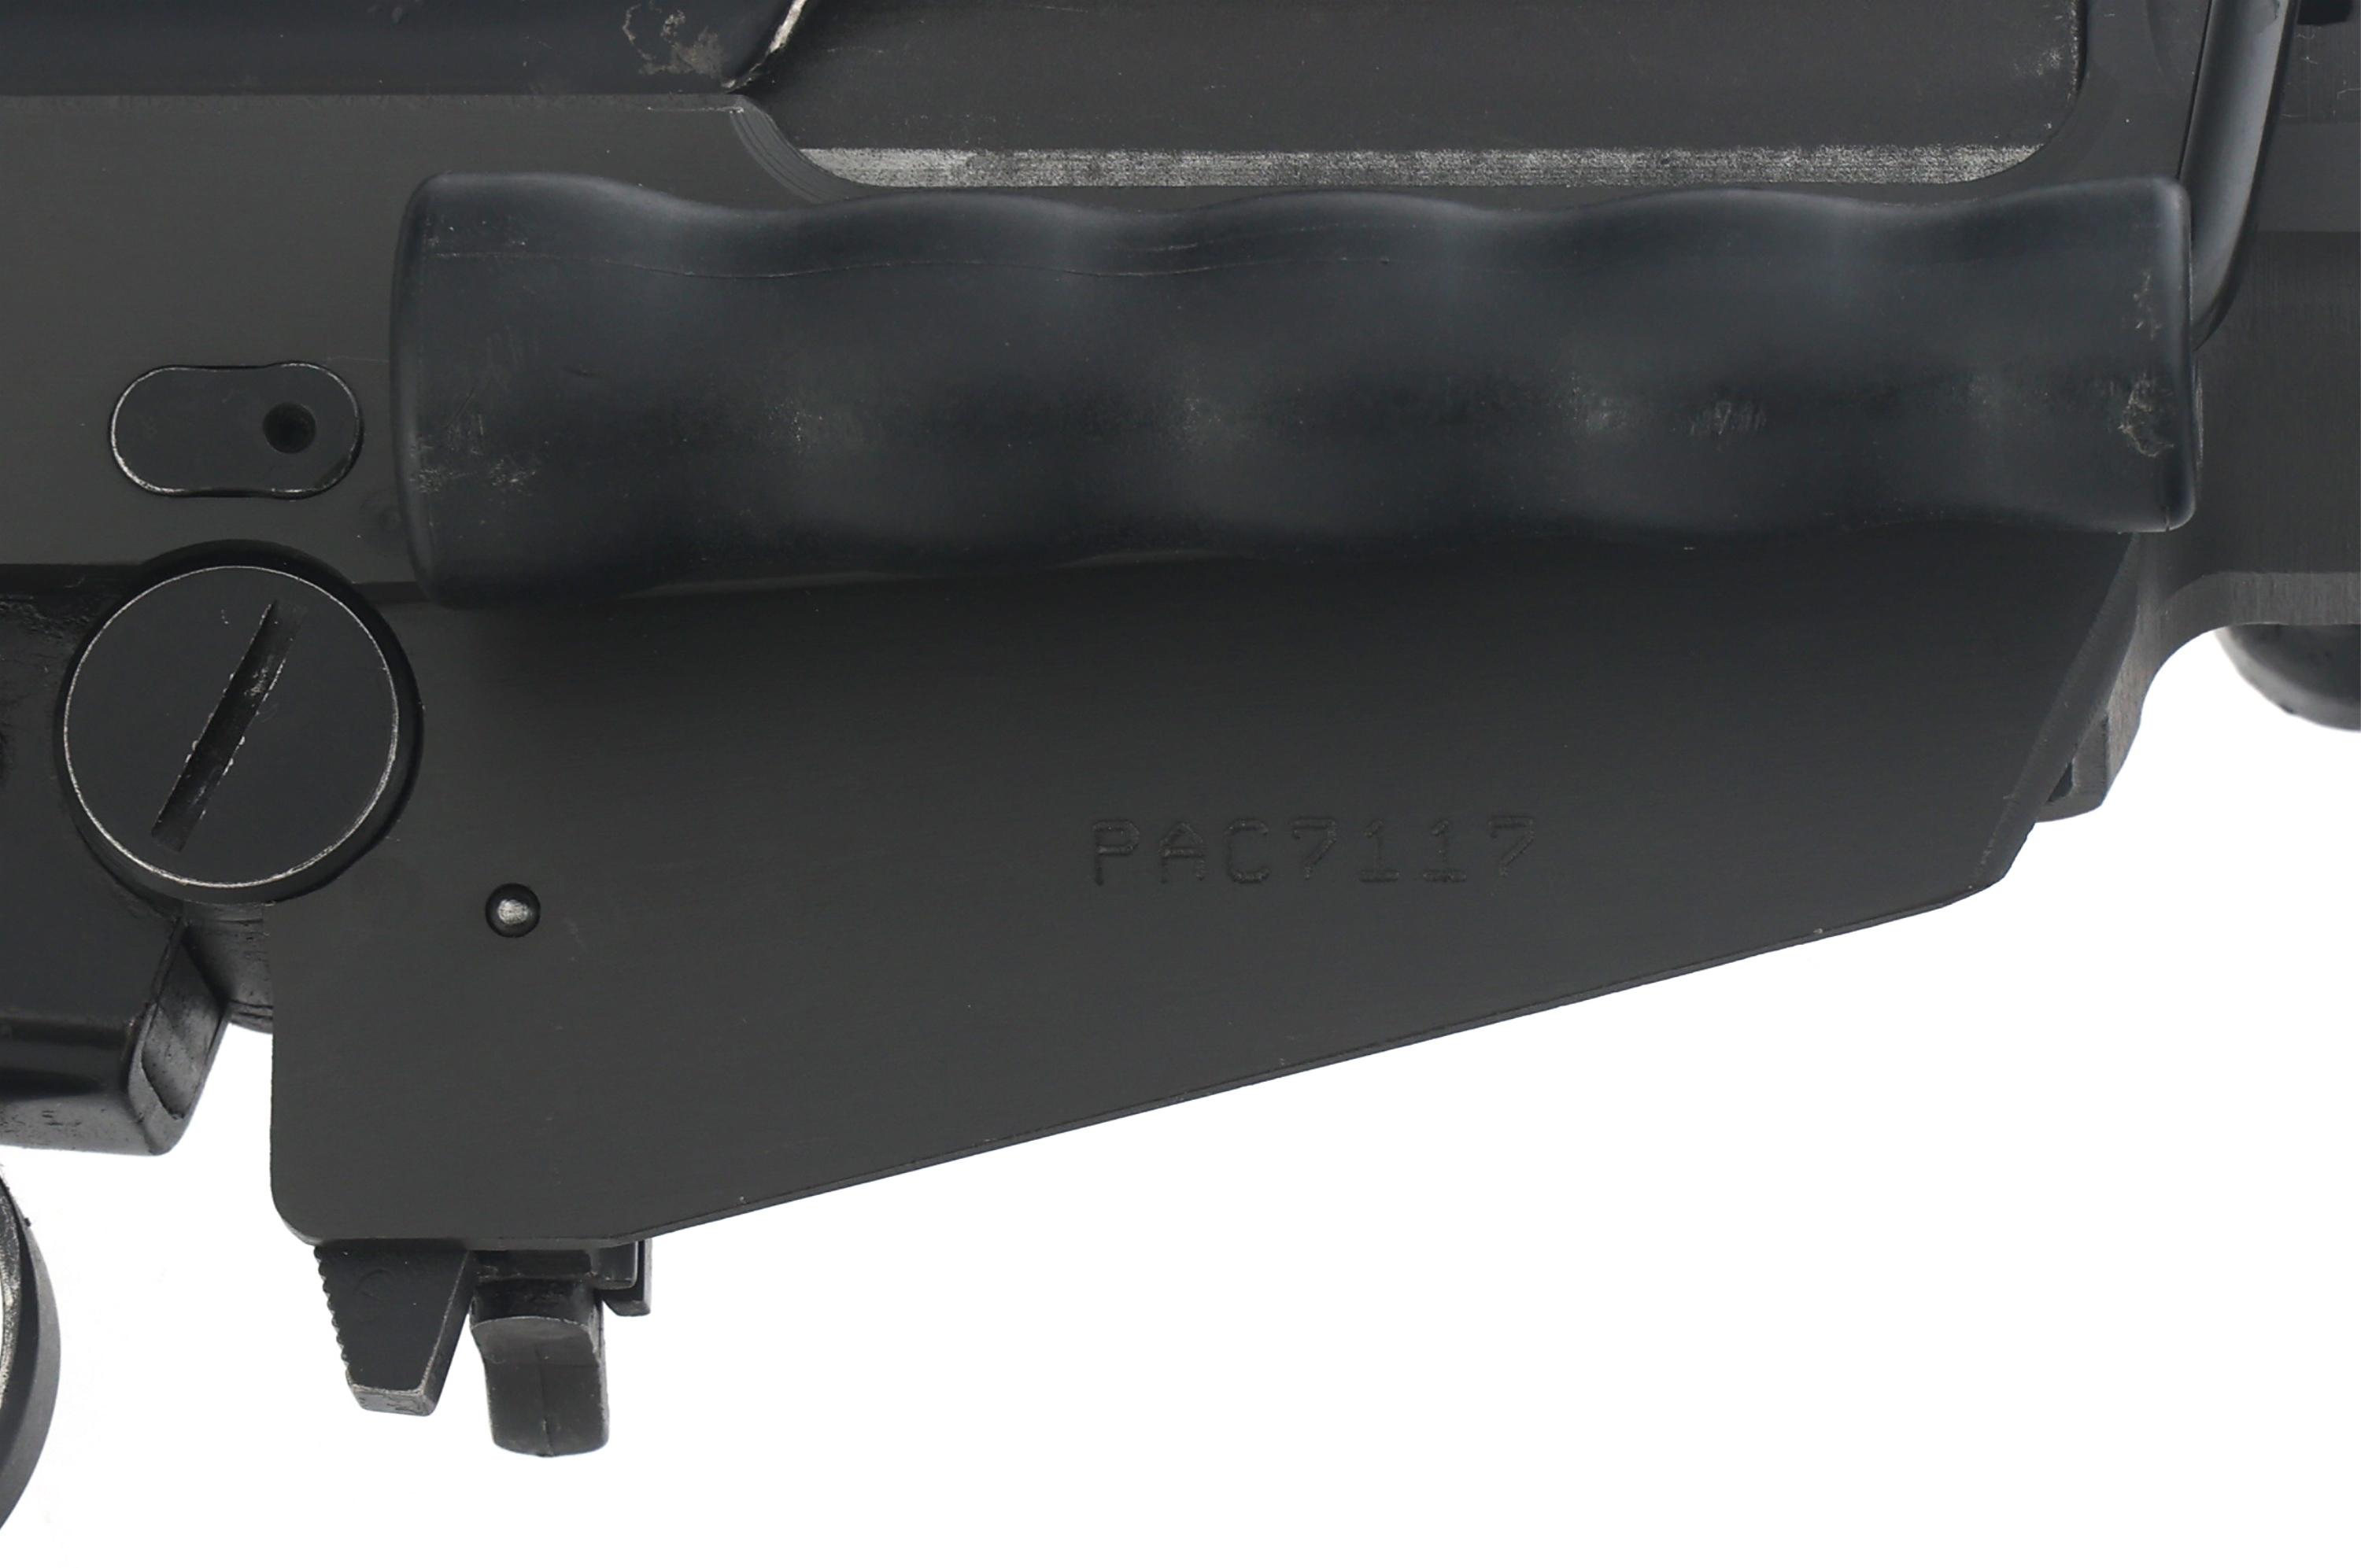 BRAZILIAN IMBEL MODEL FAL 7.62mm CALIBER RIFLE